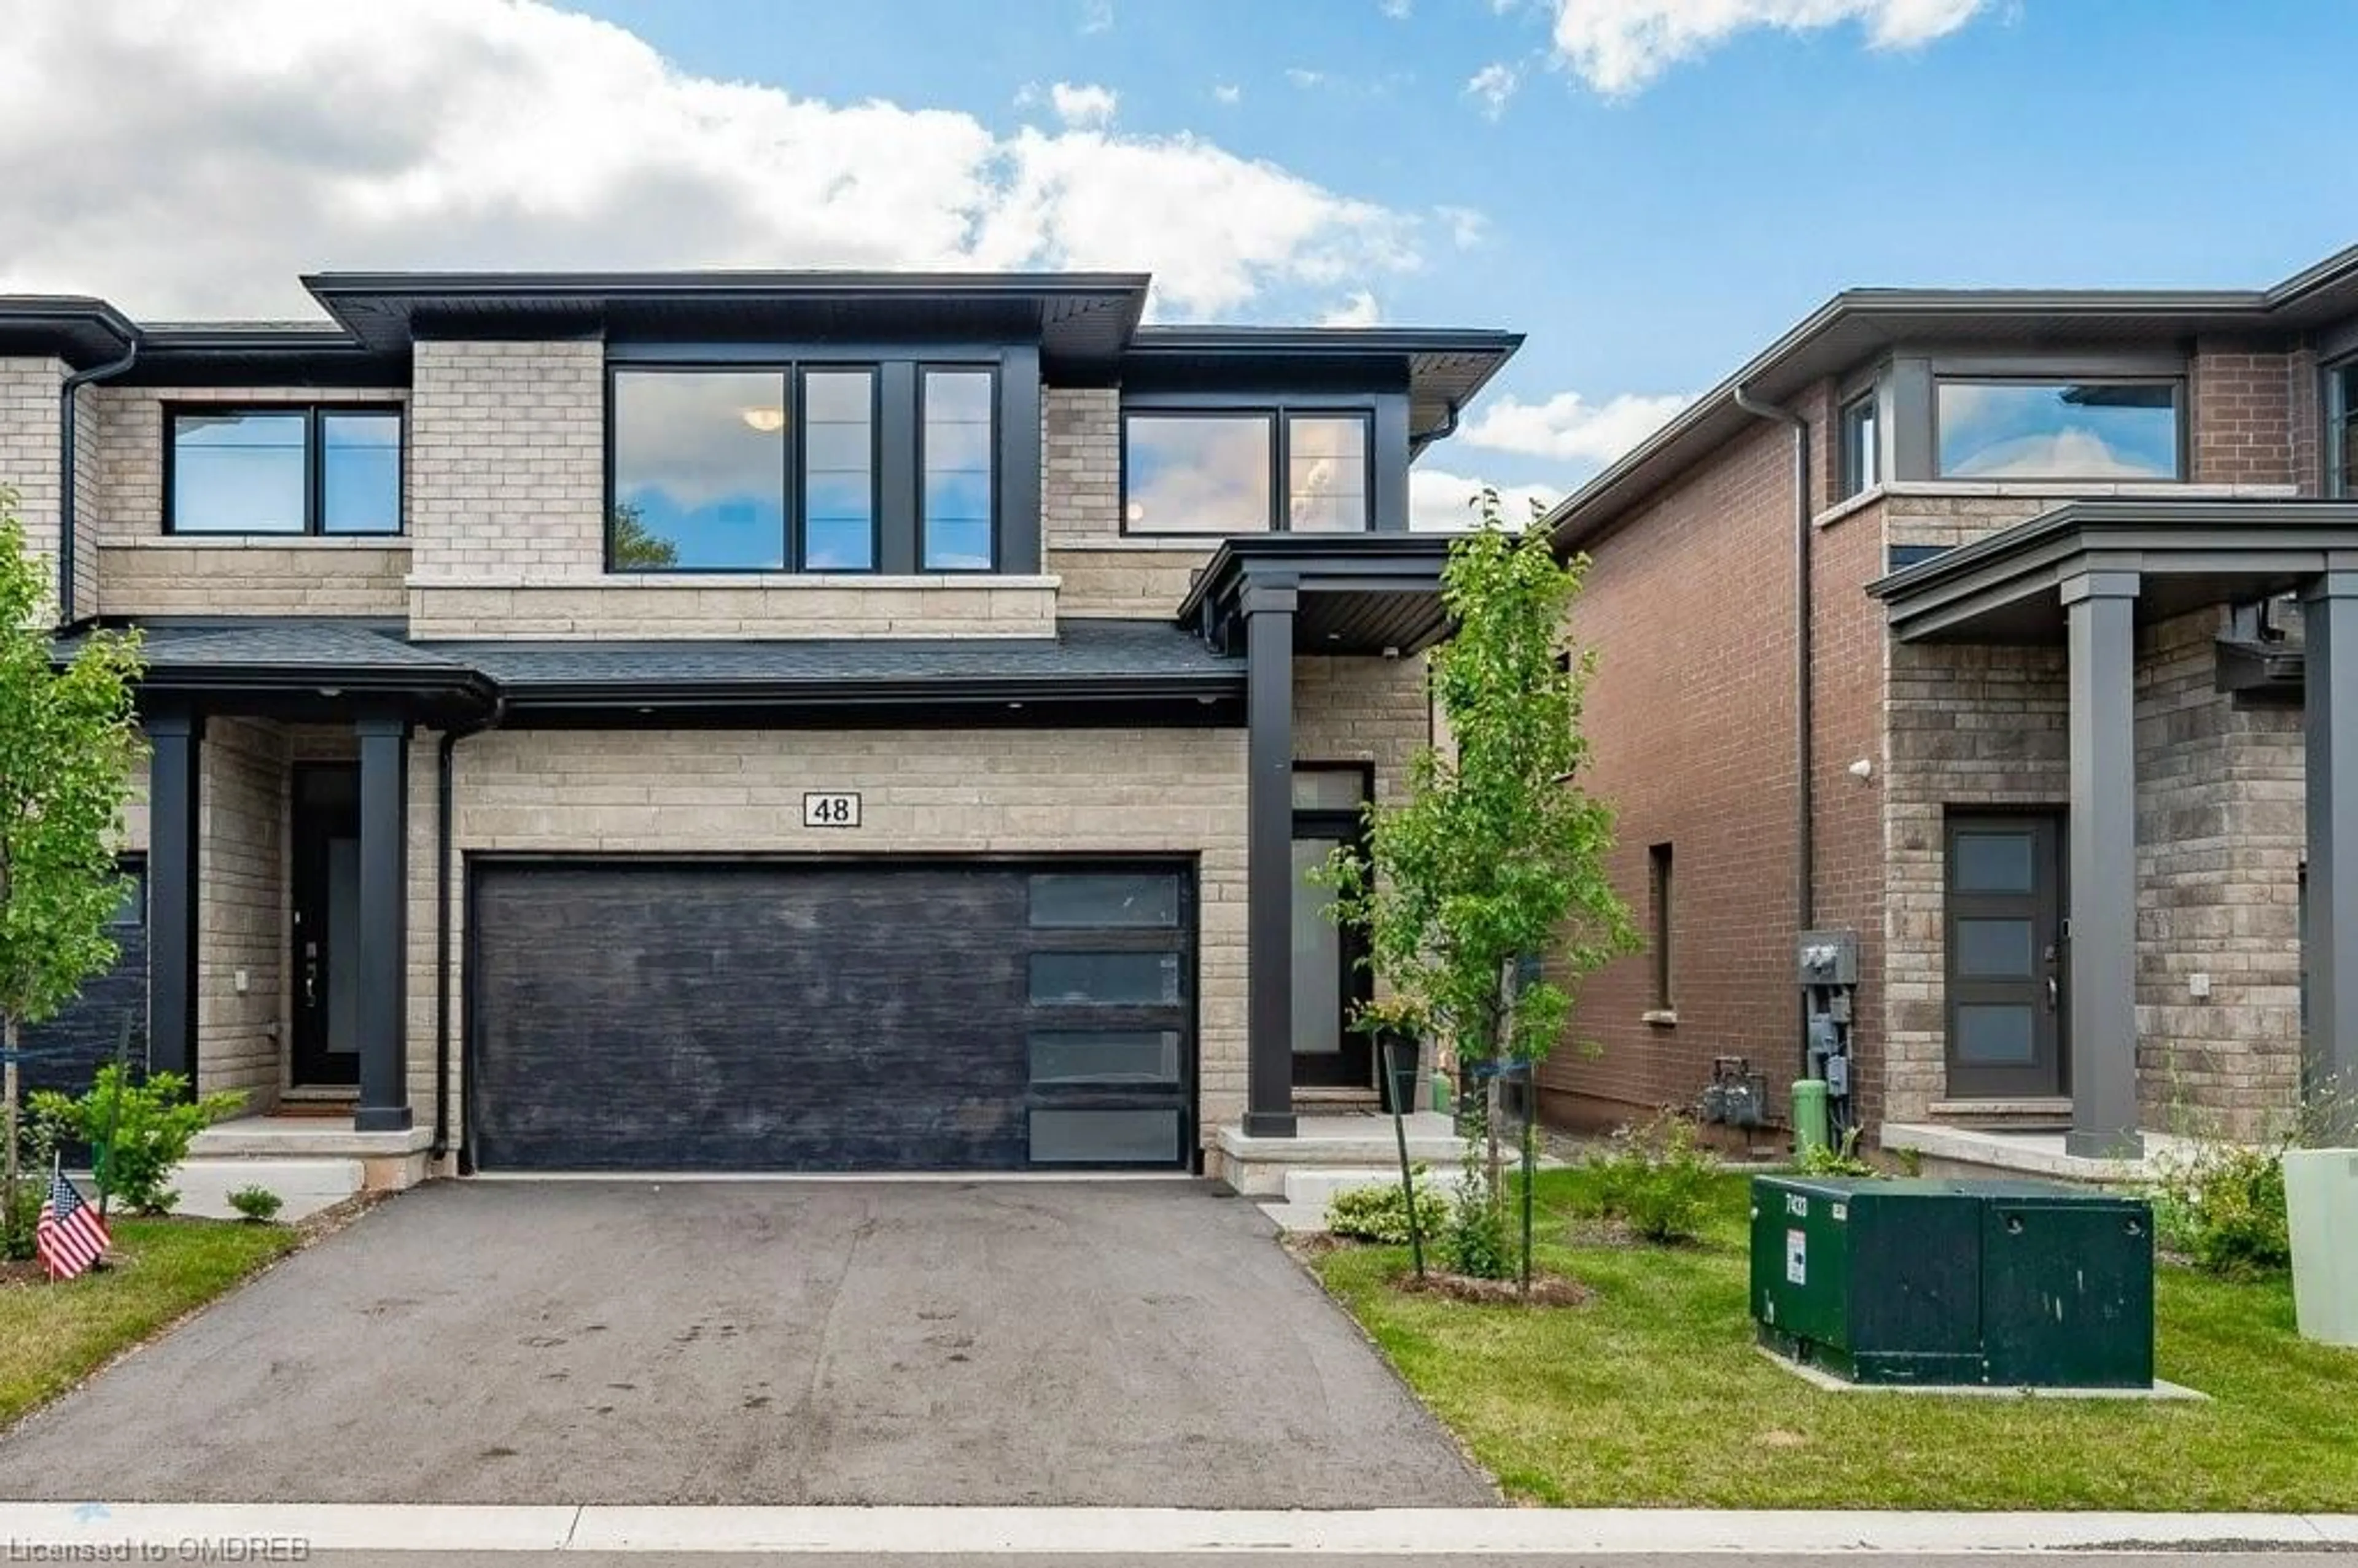 Home with brick exterior material for 4552 Portage Rd #48, Niagara Falls Ontario L2E 6A8